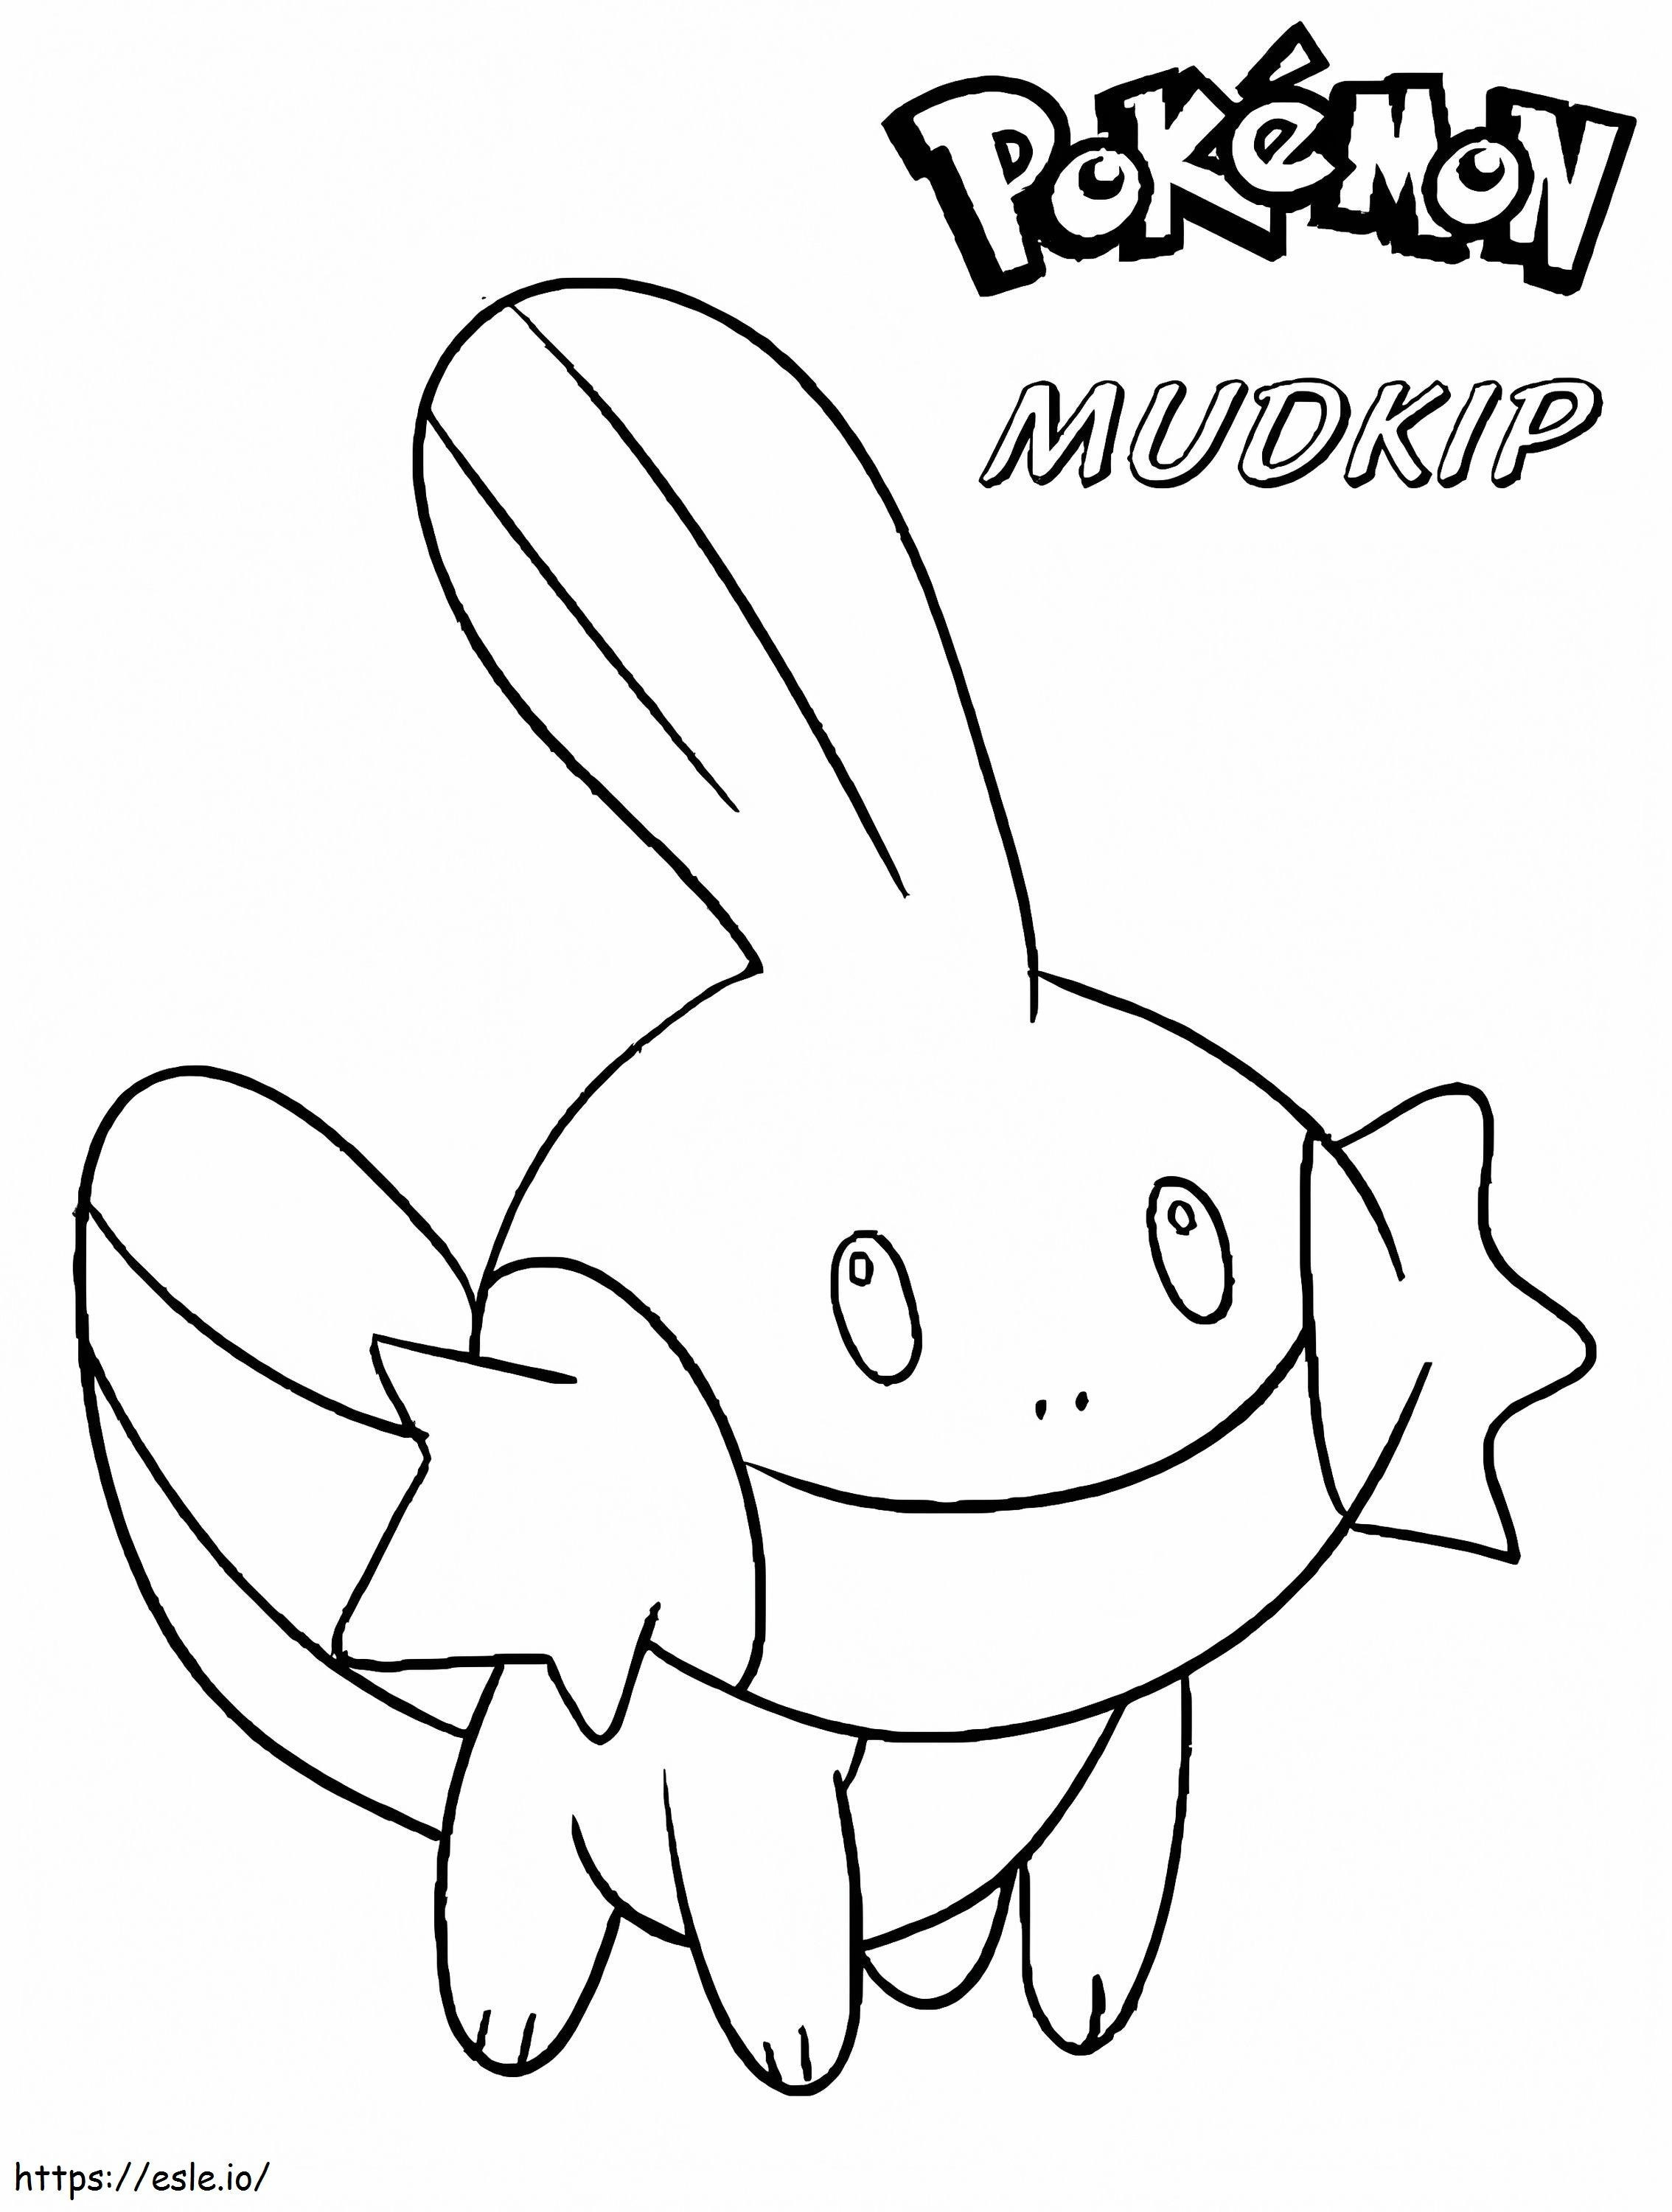 Printable Mudkip coloring page